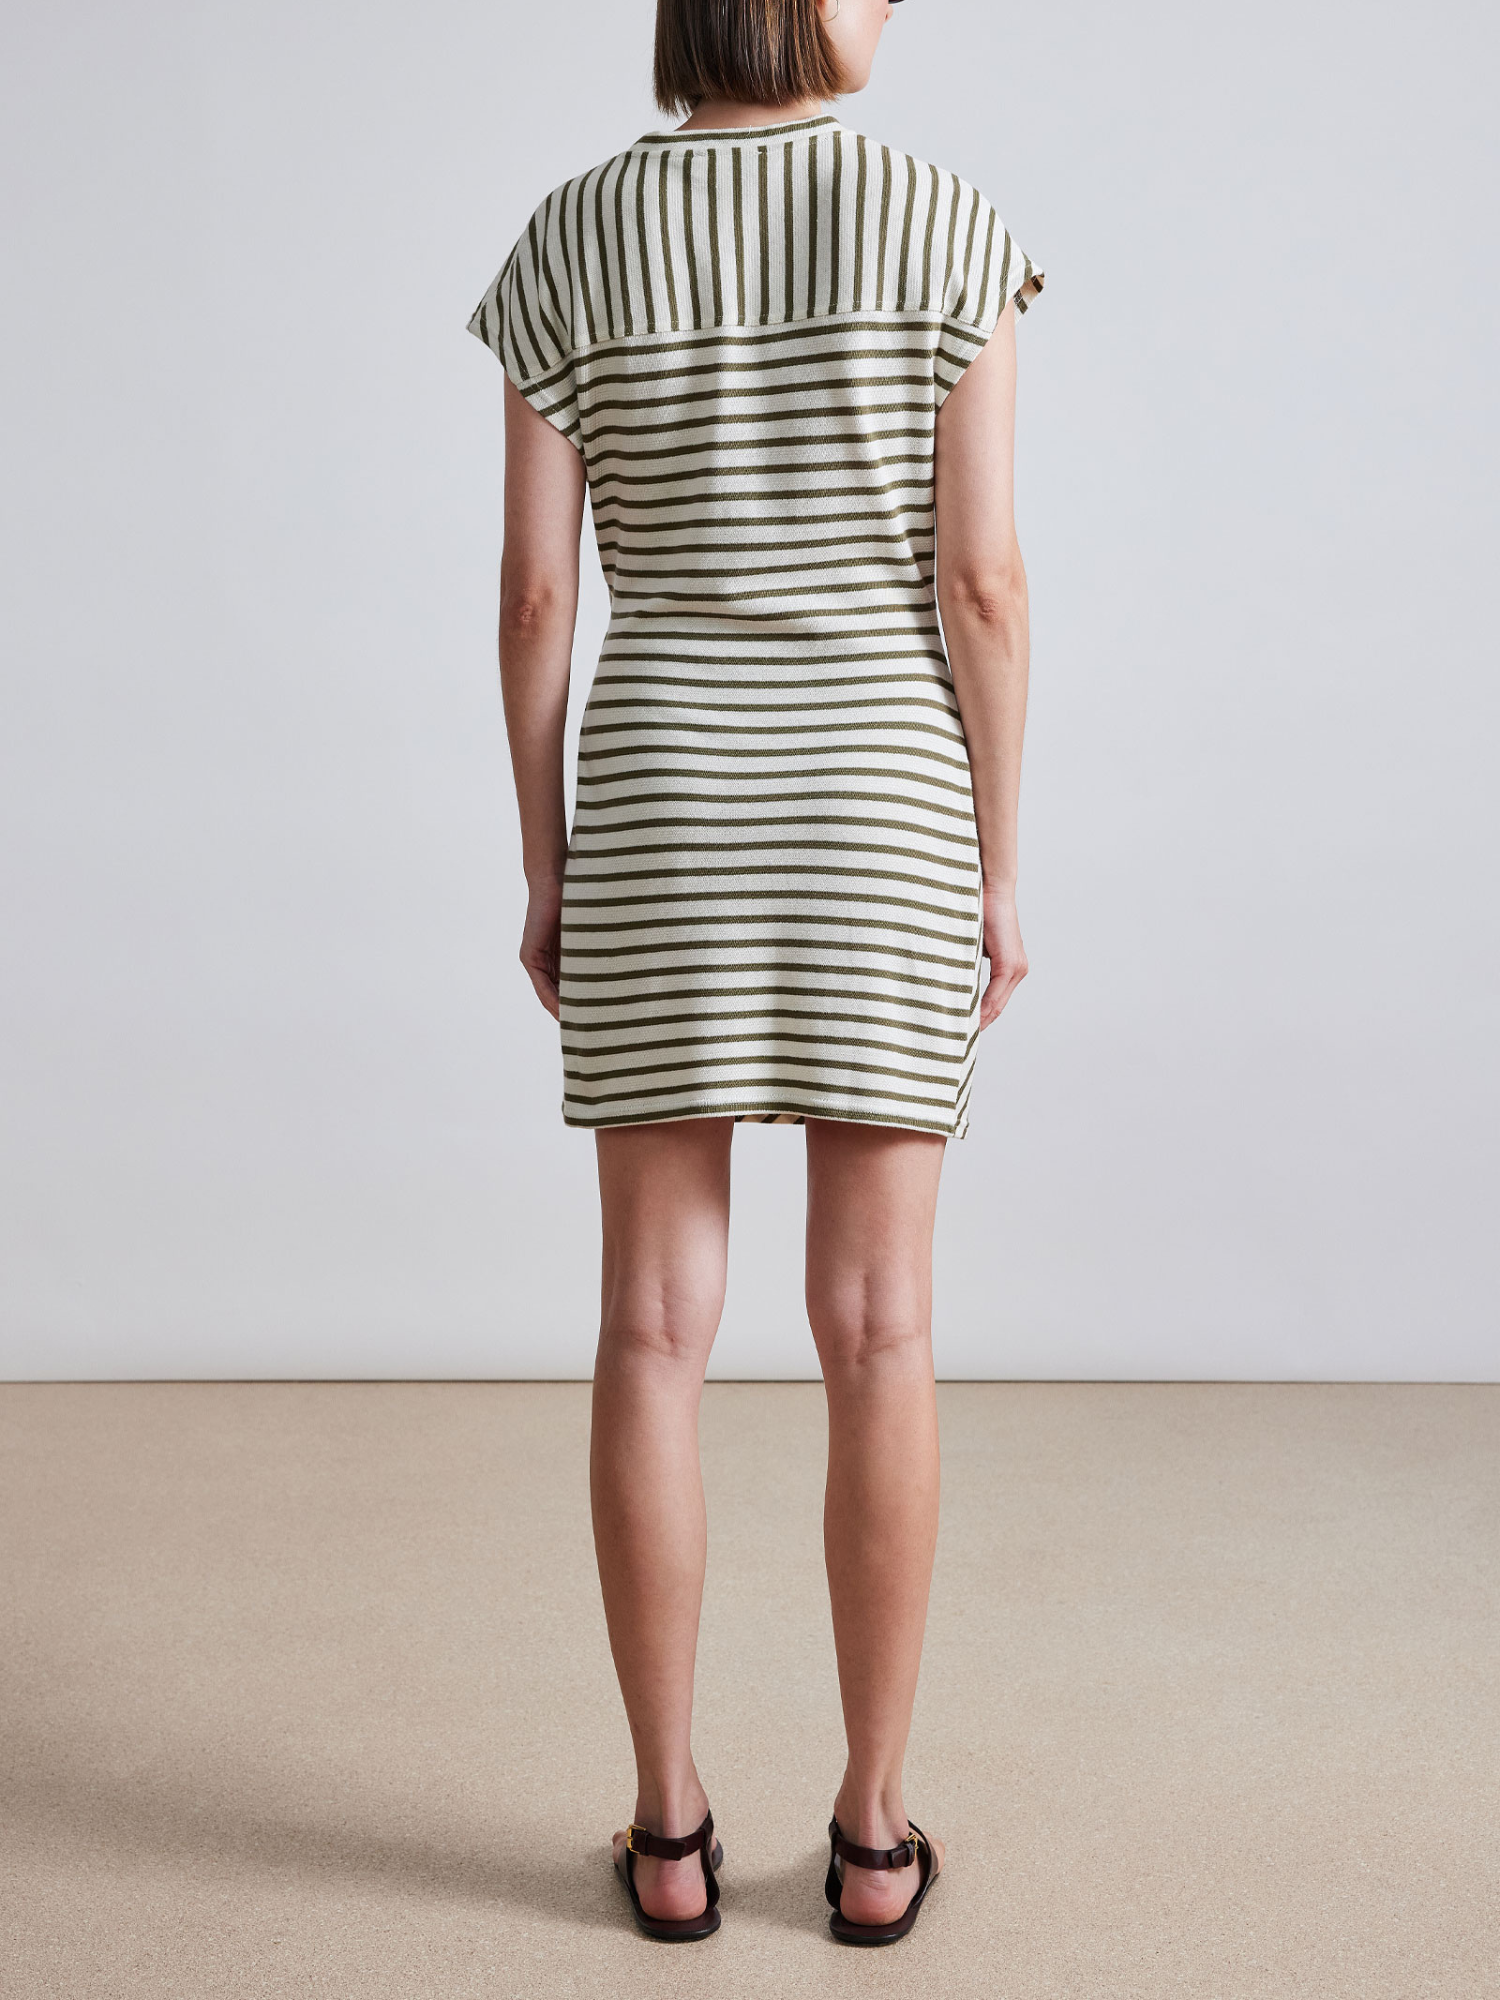 Apiece Apart Nina Cinched Mini Dress in Cream and Olive Stripe